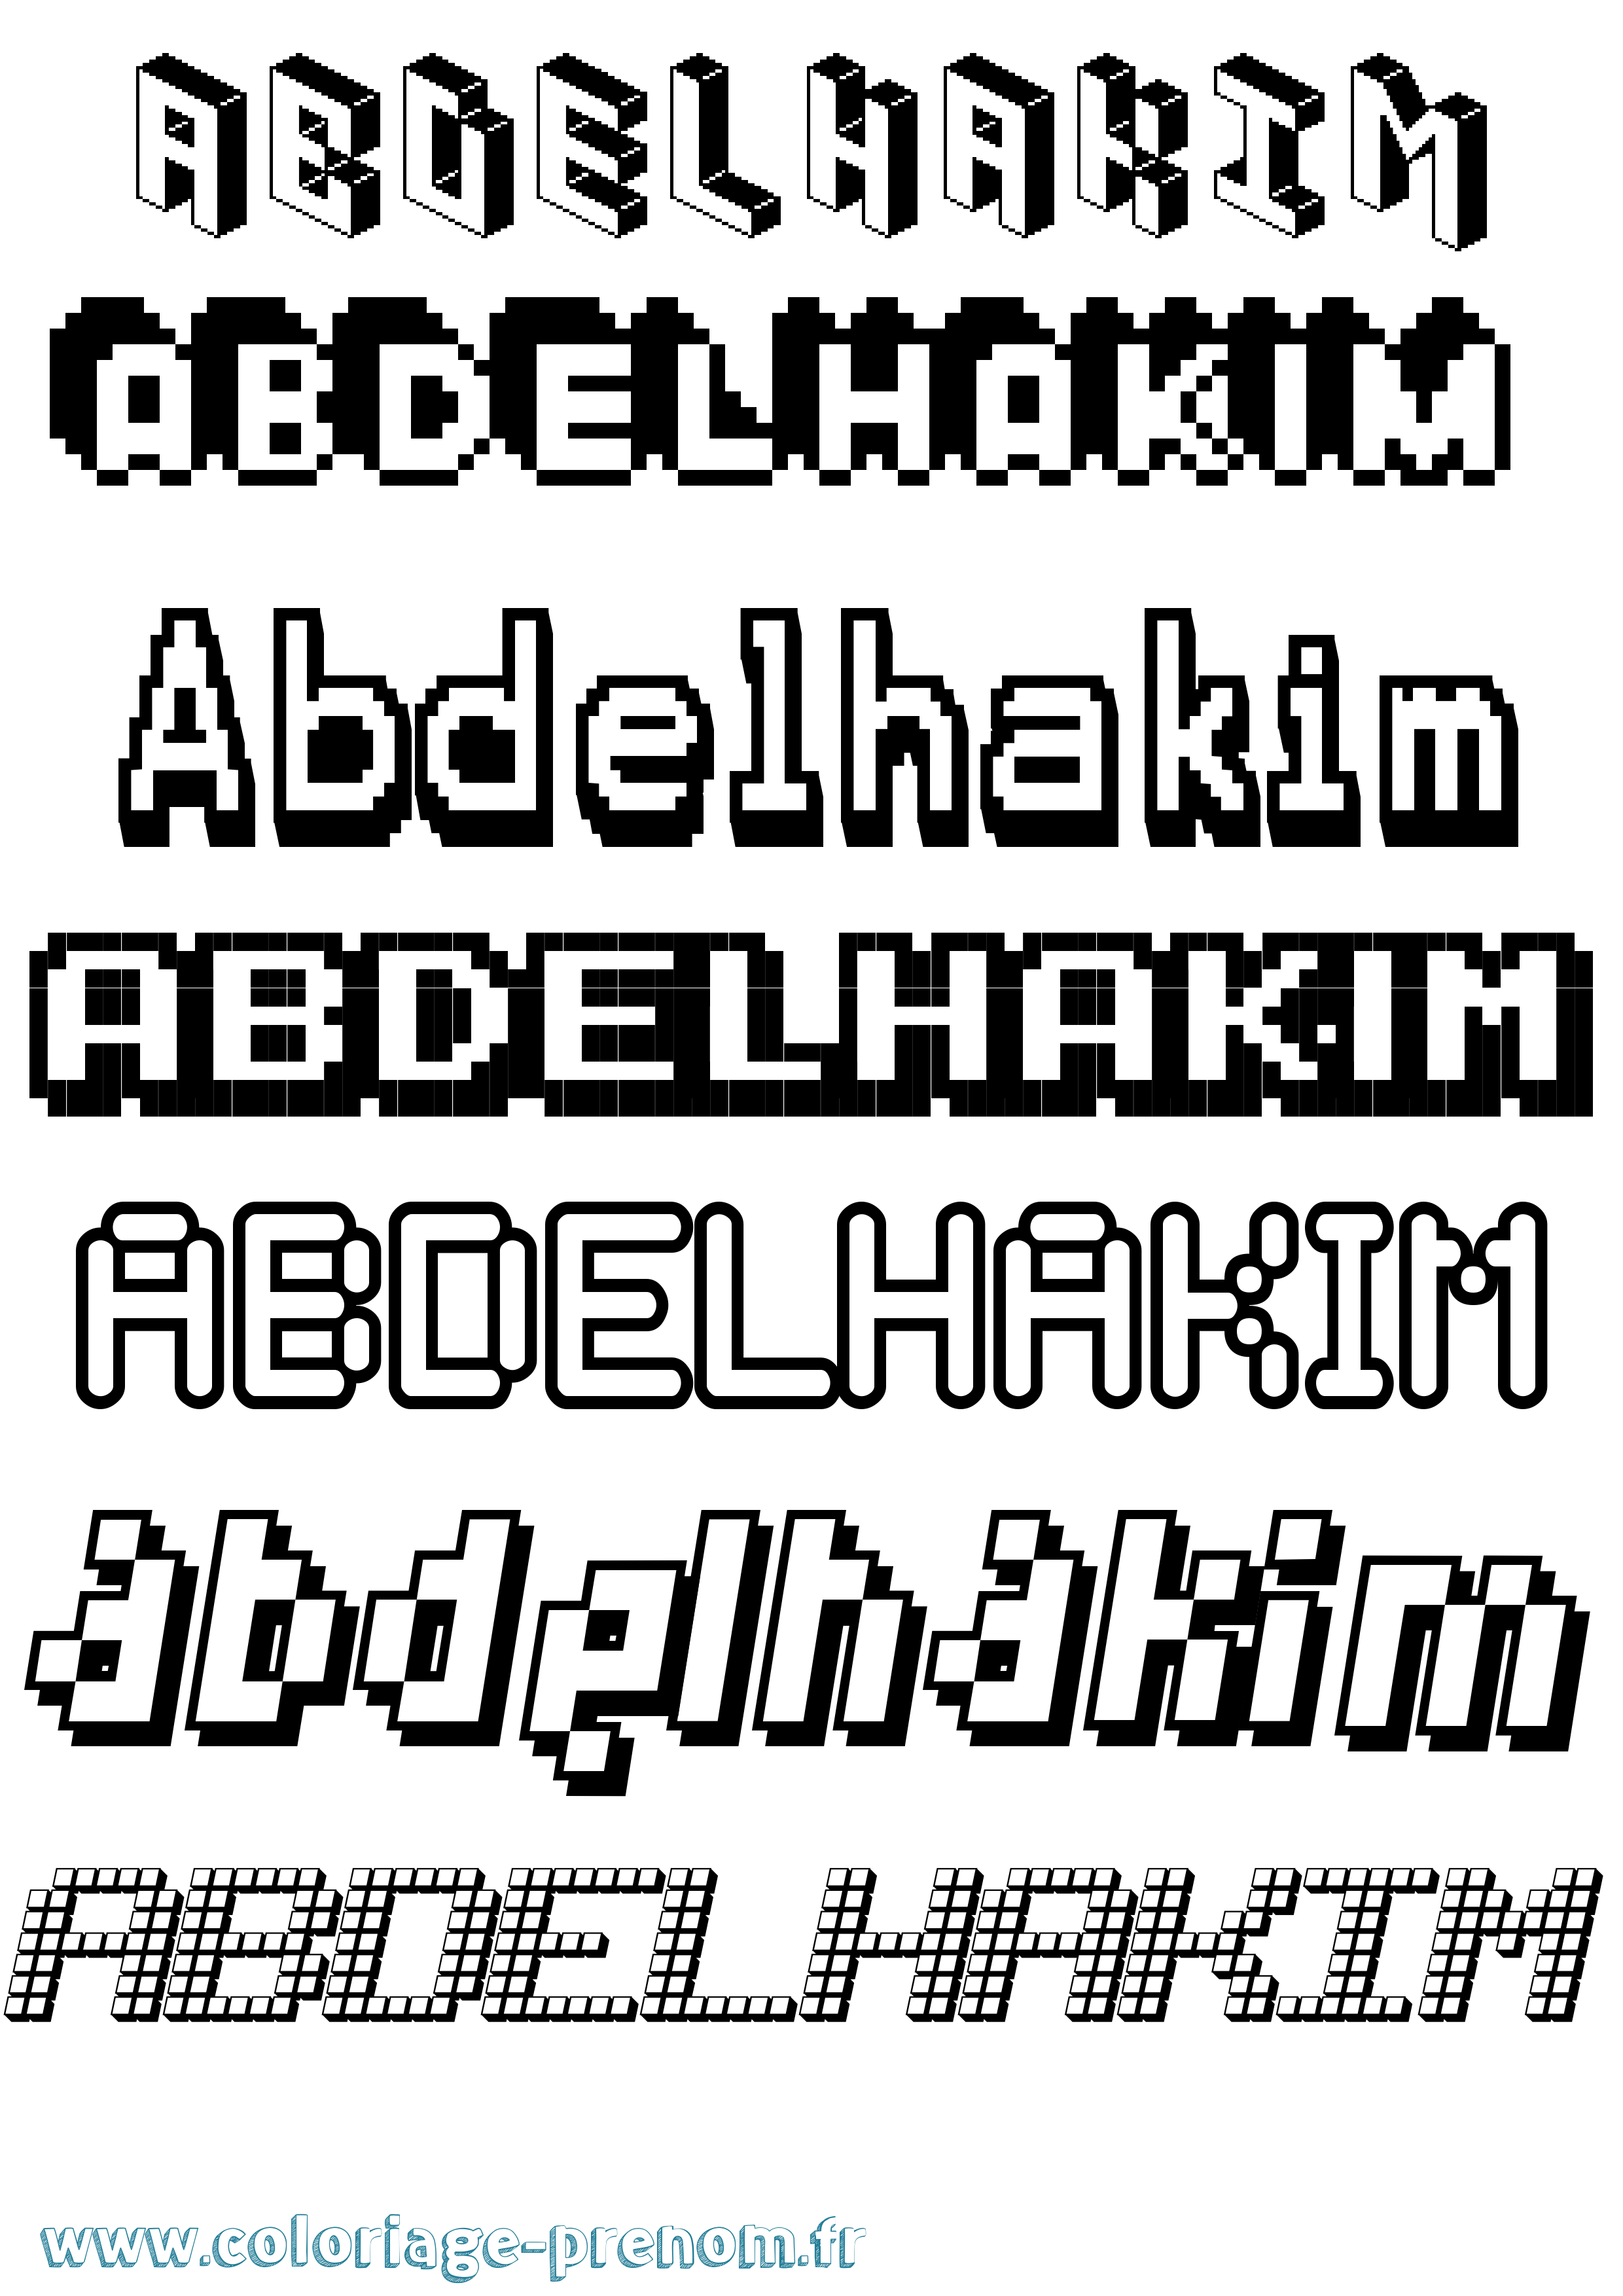 Coloriage prénom Abdelhakim Pixel